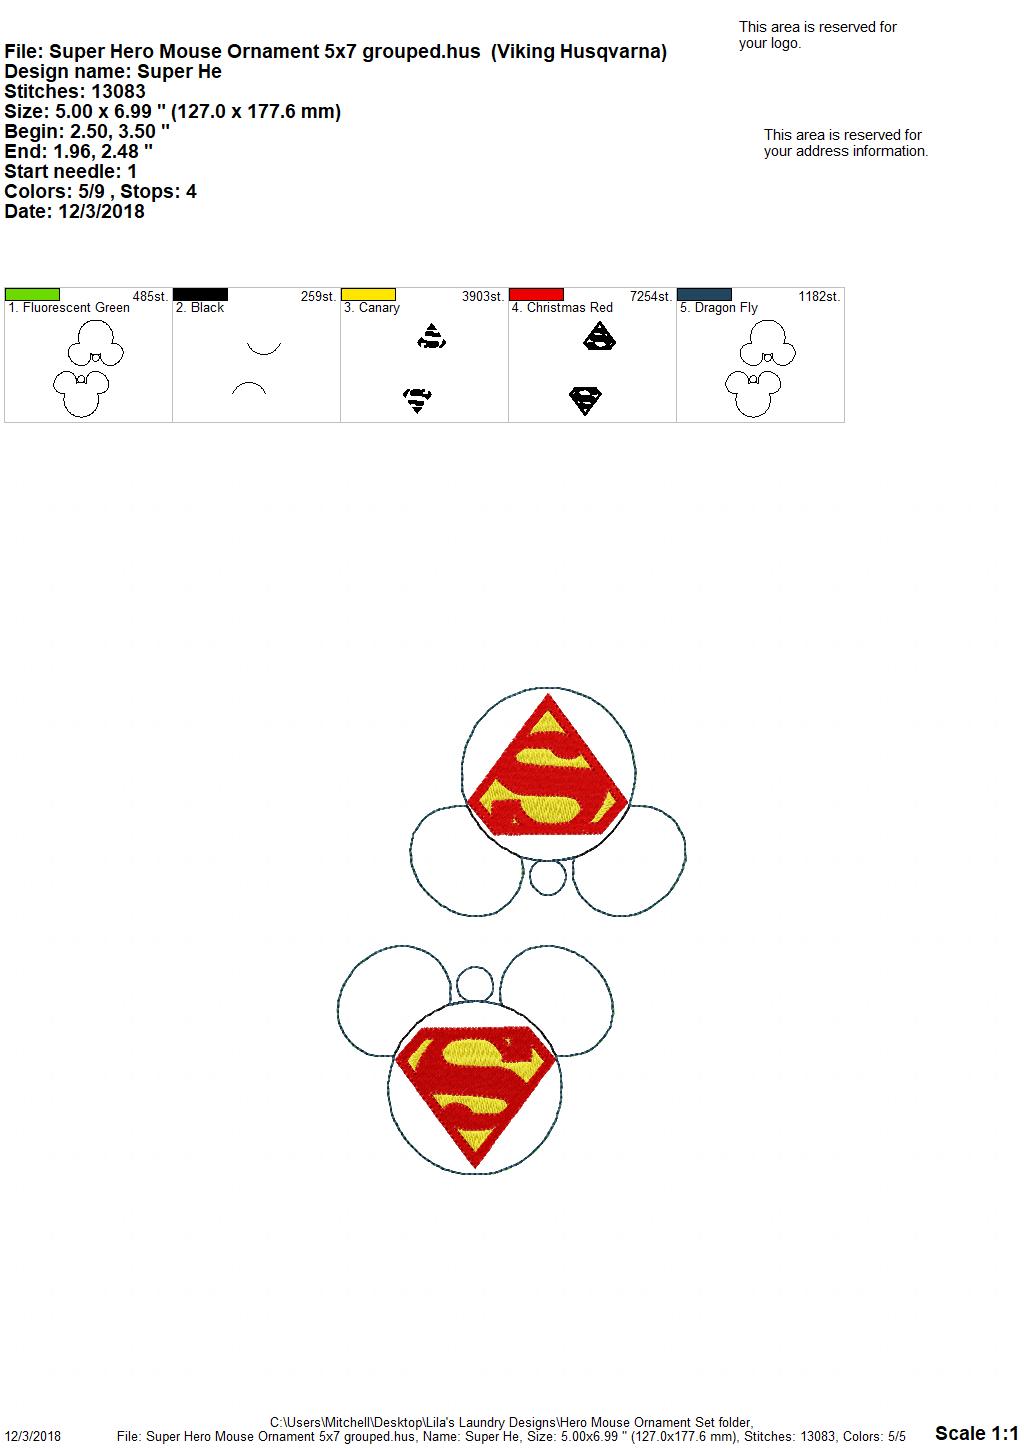 Super Hero Mouse Ornament - Embroidery Design - DIGITAL Embroidery DESIGN